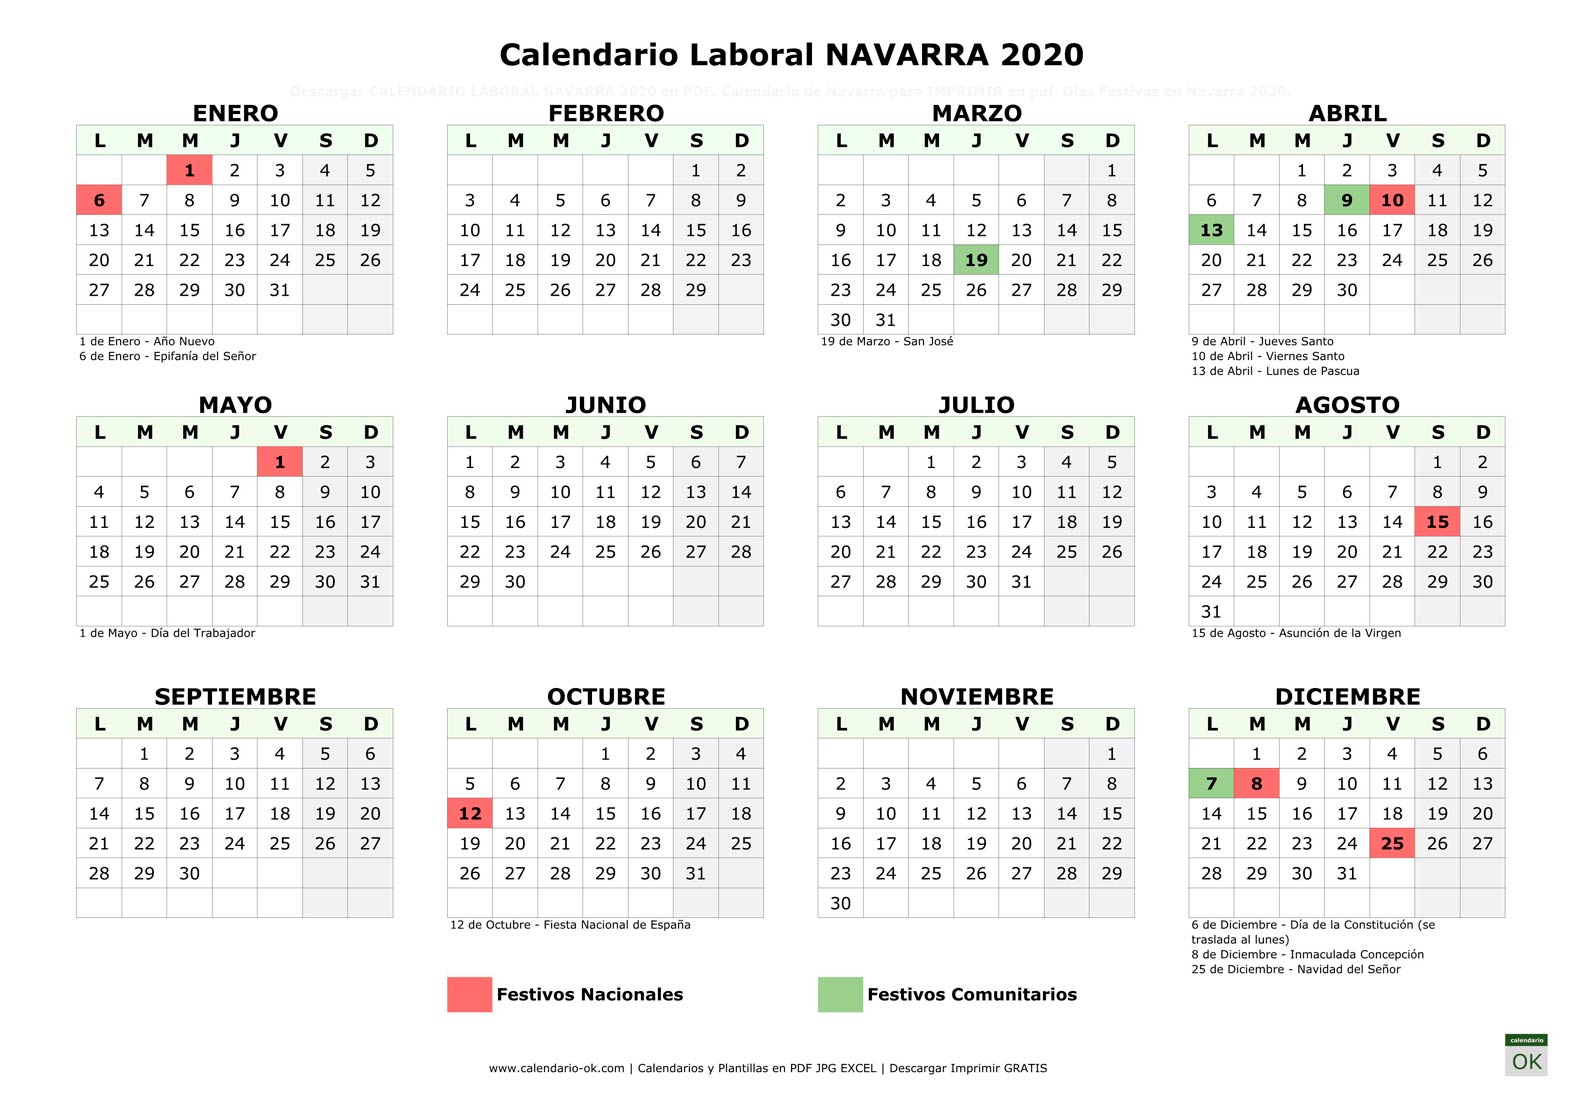 Calendario Laboral NAVARRA 2020 horizontal